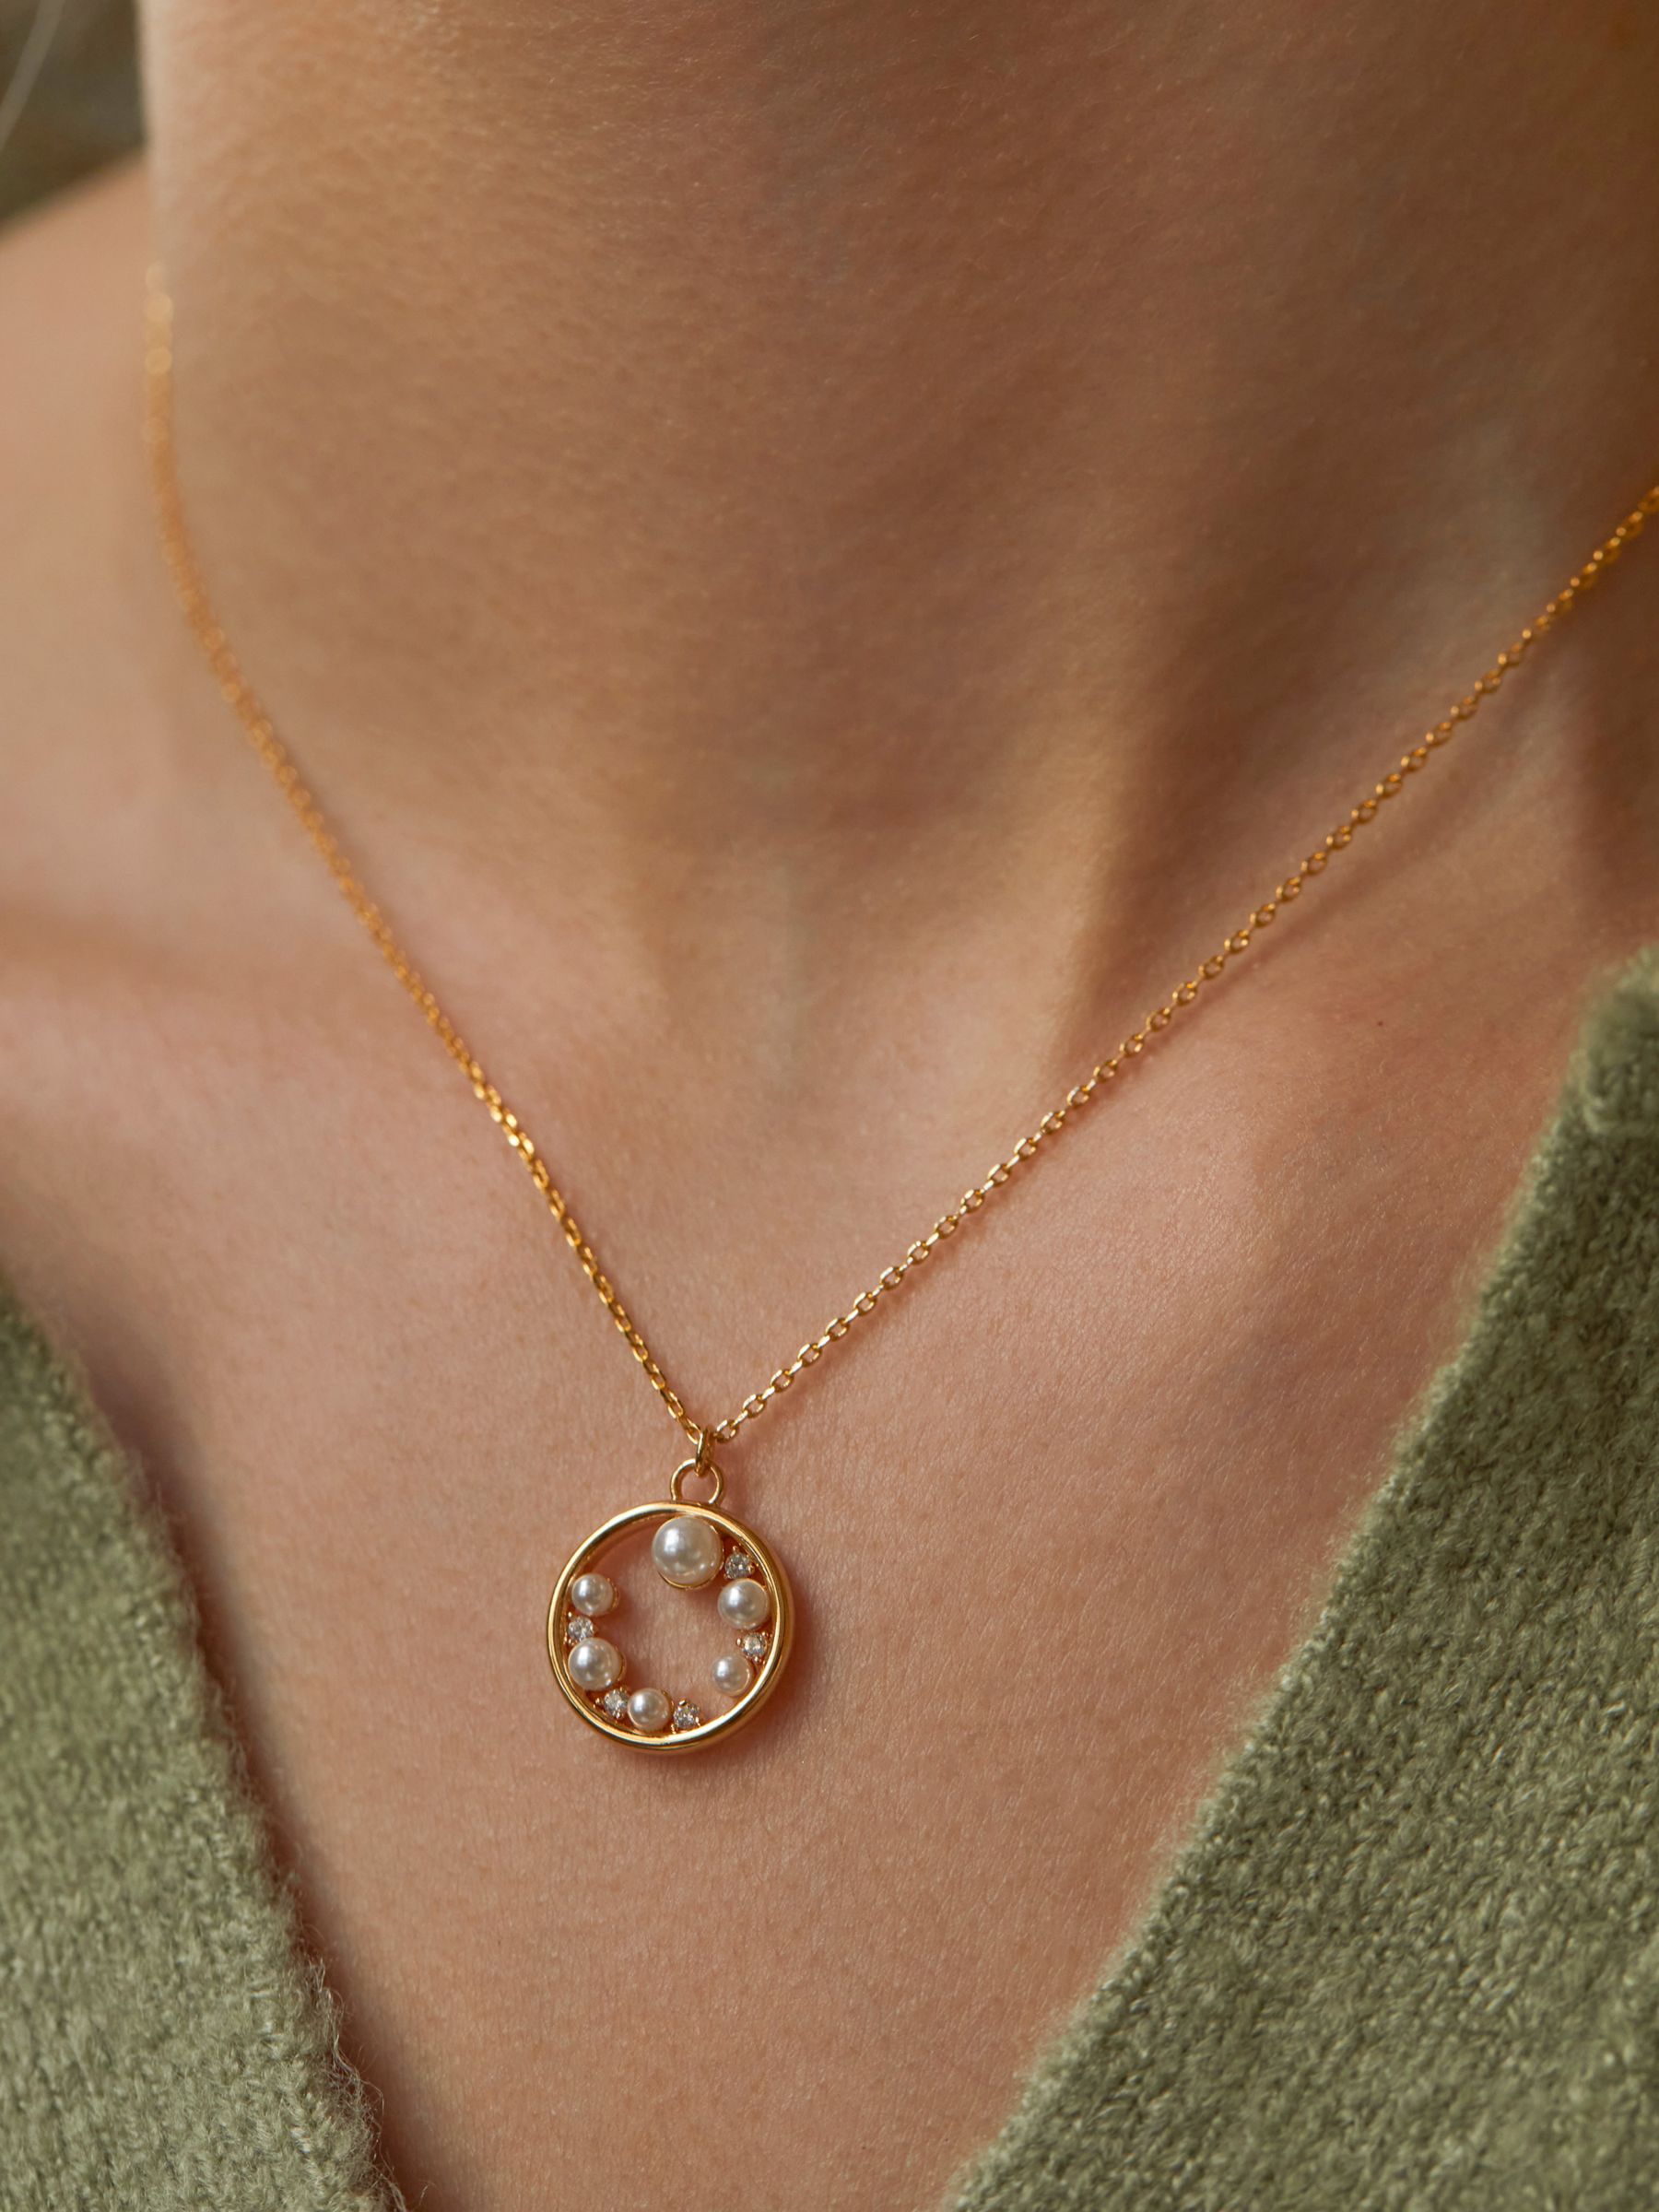 Buy Estella Bartlett Pearl & Cubic Zirconia Circle Pendant Necklace Online at johnlewis.com